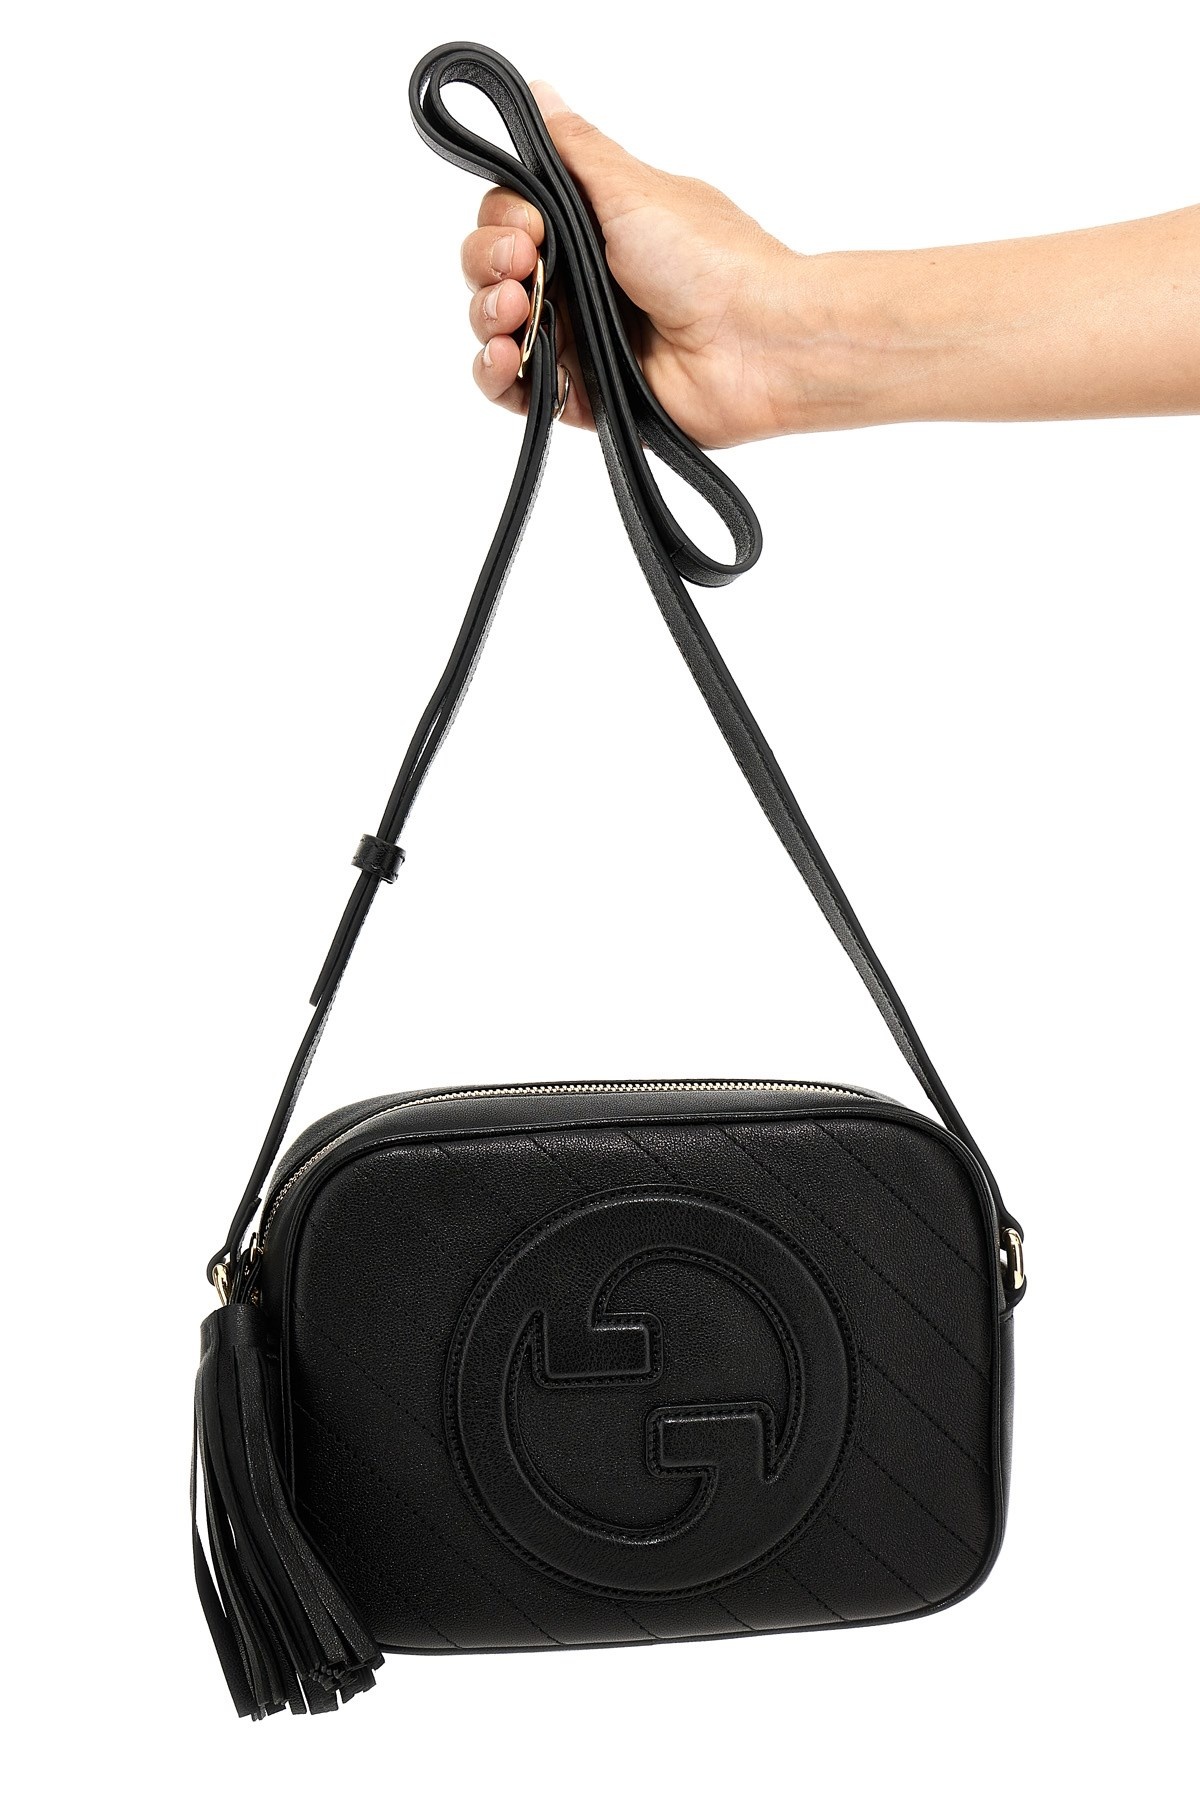 Gucci Blondie small crossbody bag - 2